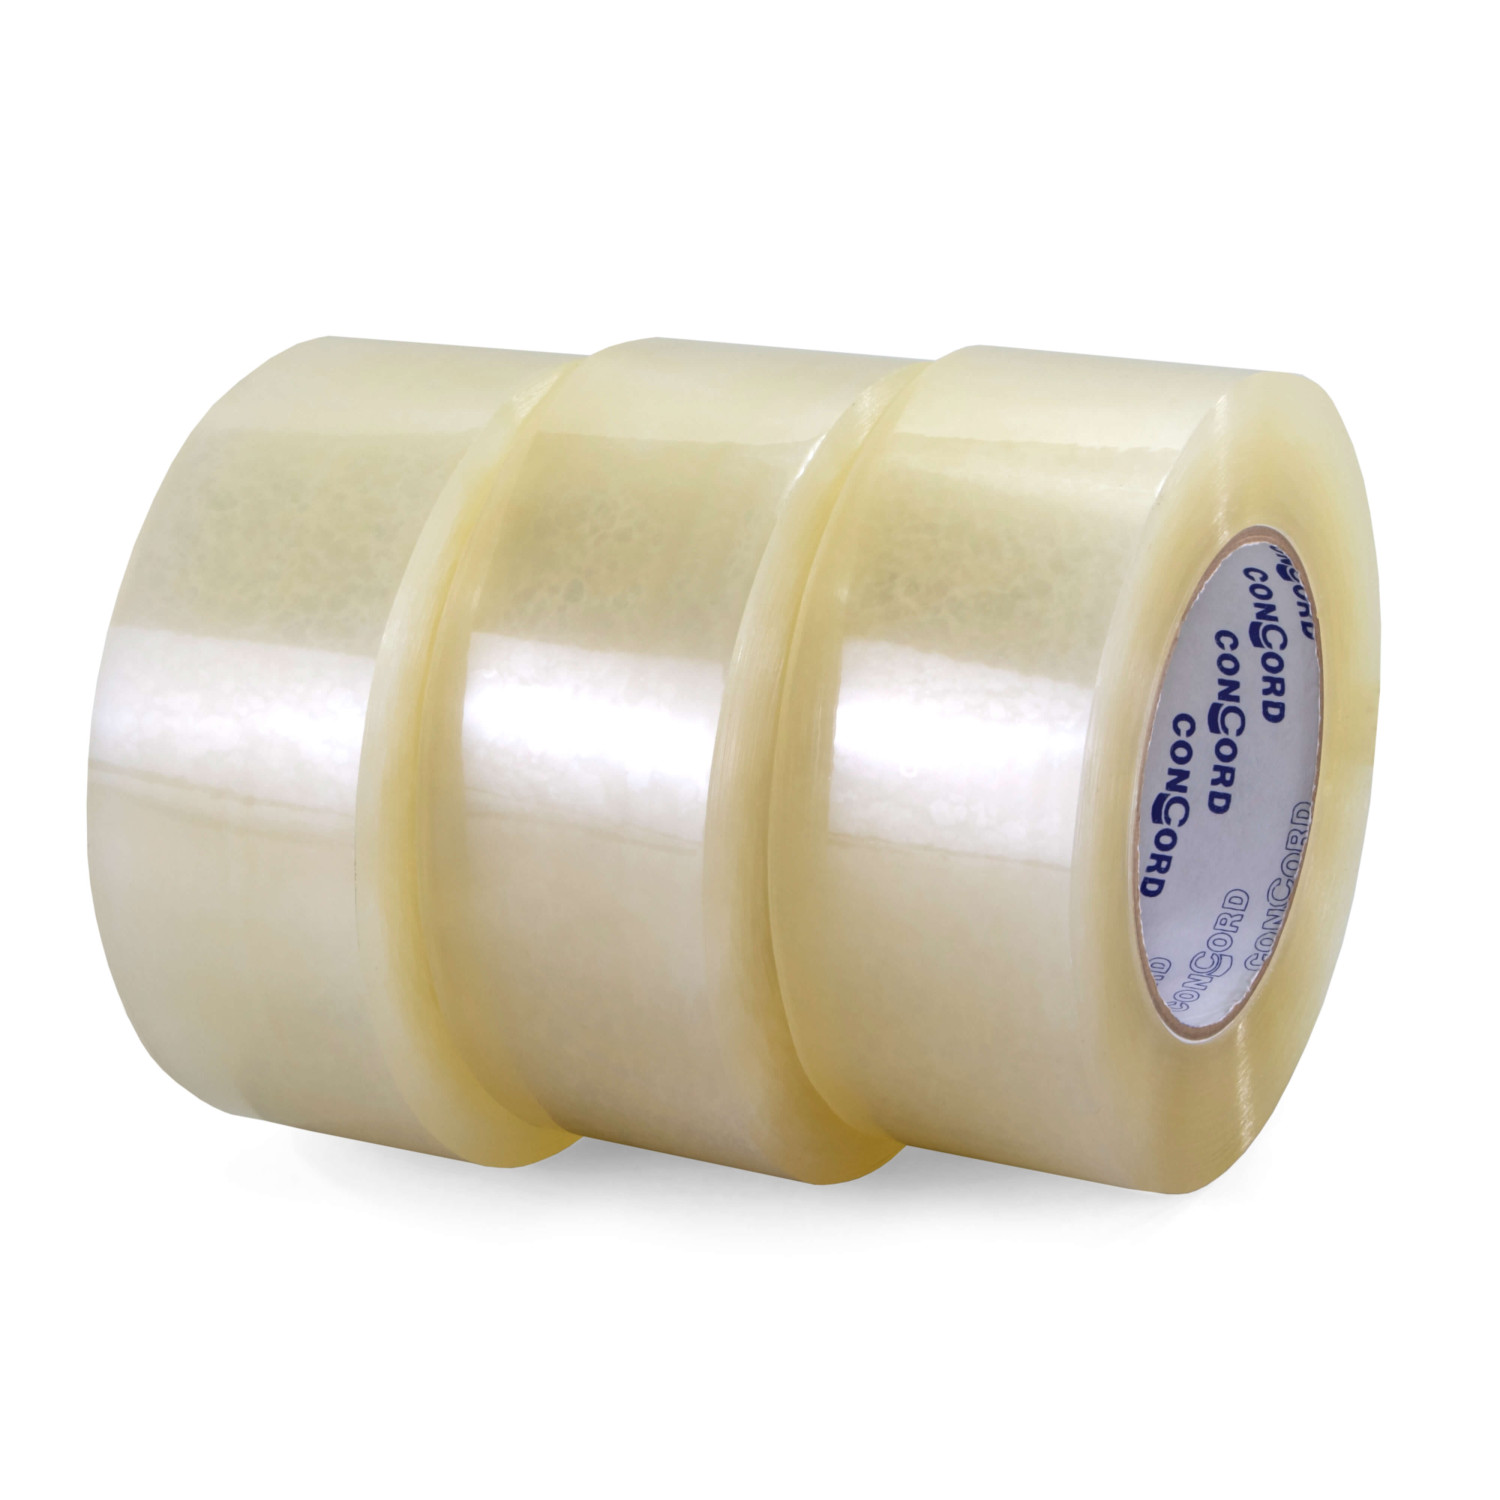 Green Carton Sealing Tape - 2 X 110 Yards (48mm X 100m) -    Shipping Boxes, Shipping Supplies, Packaging Materials, Packing Supplies